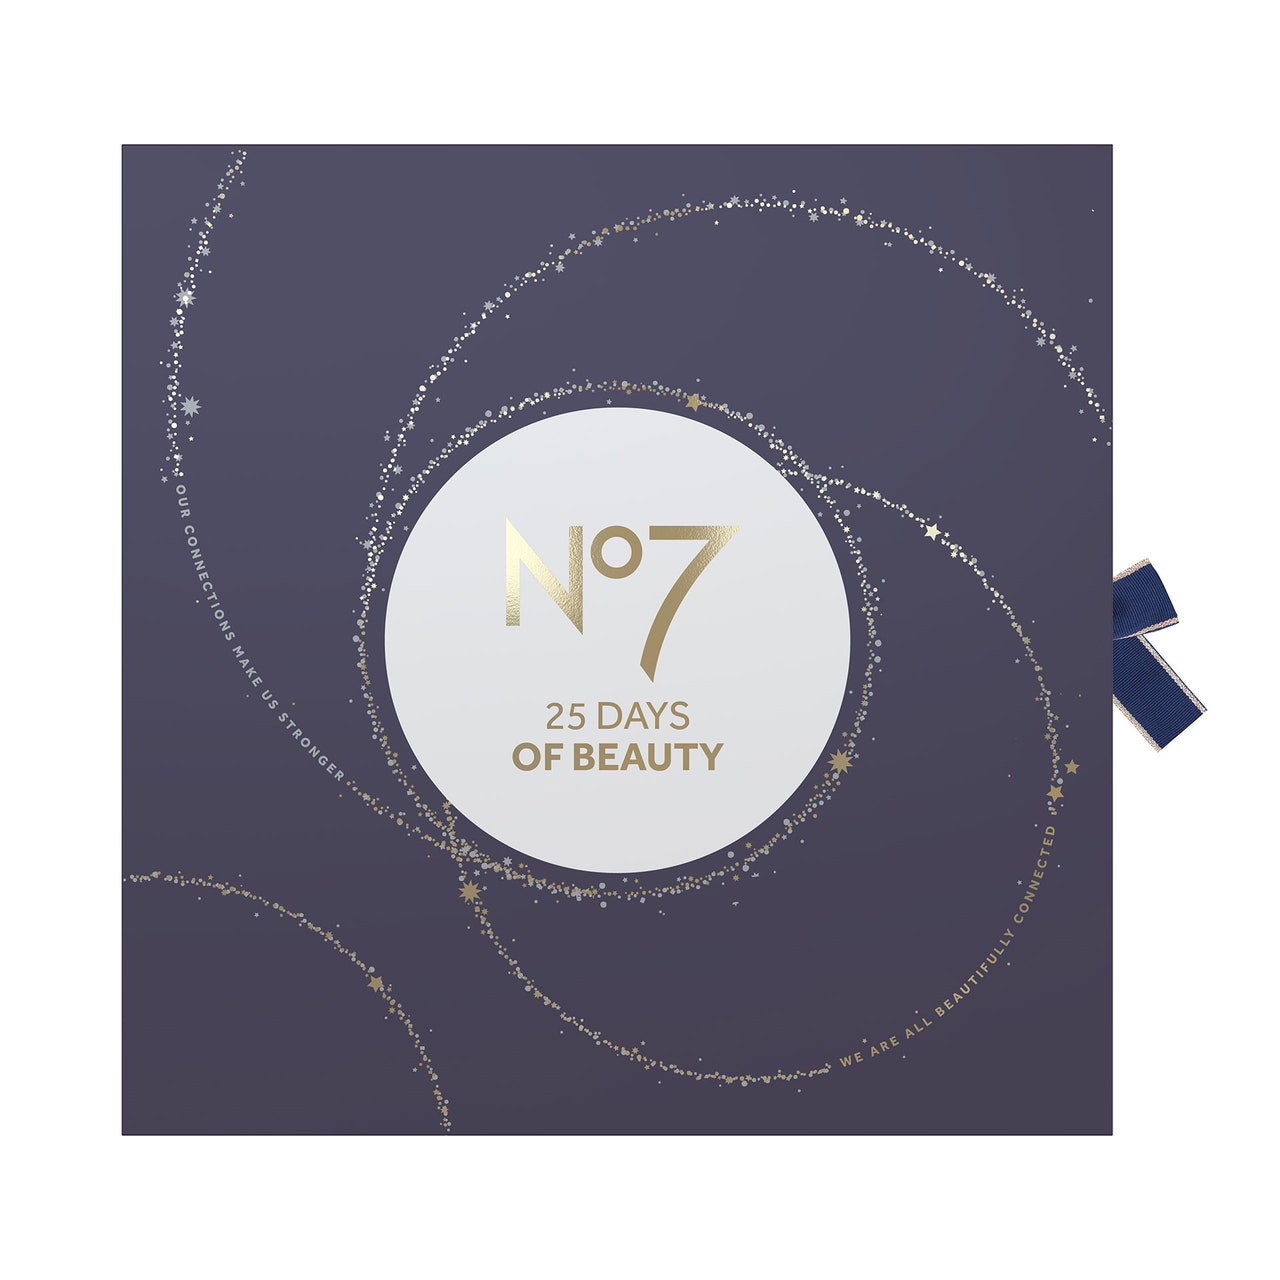 No7 Beauty Advent Calendar